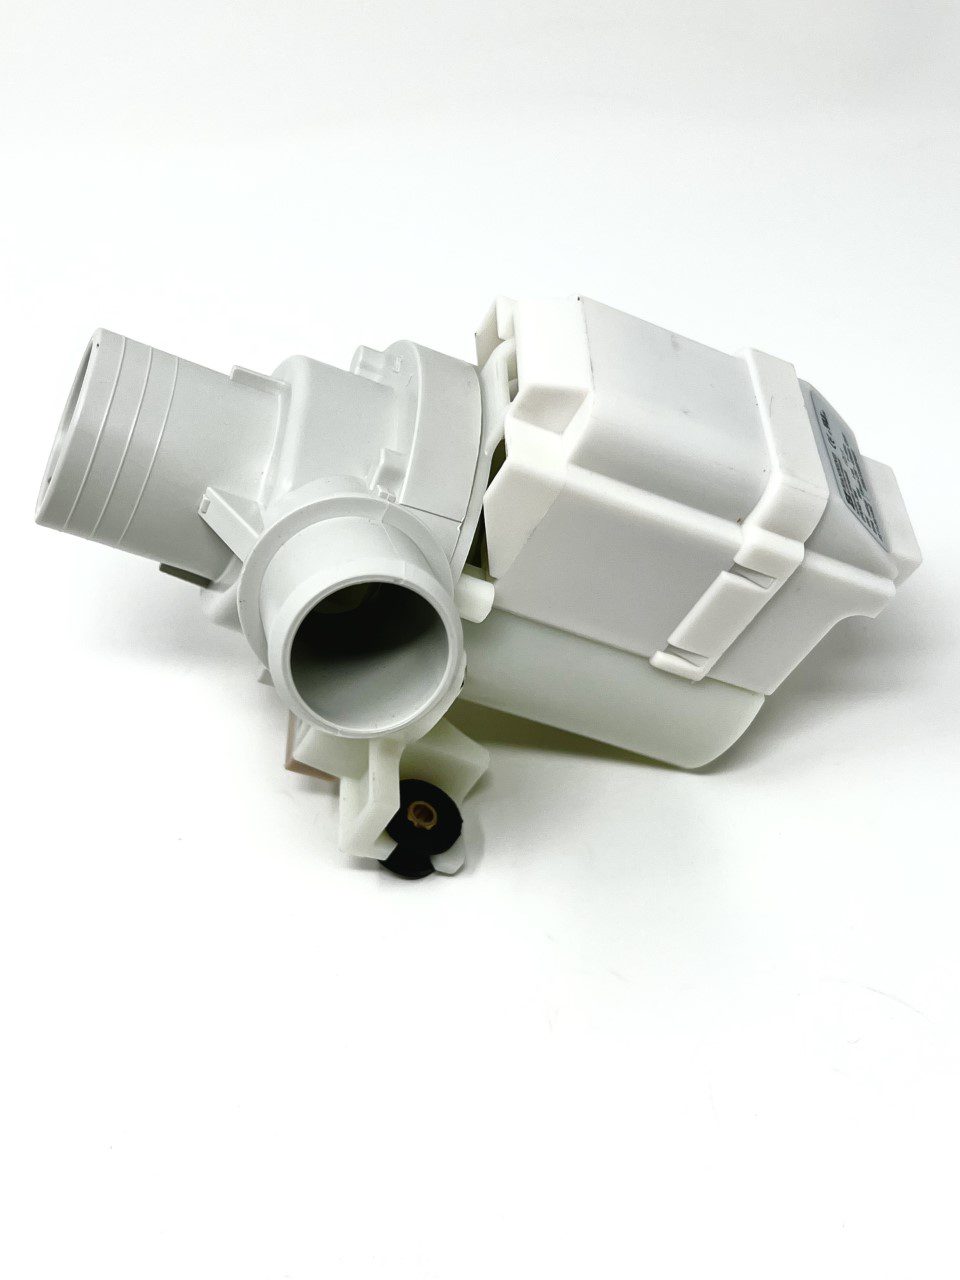 NEW Lg 5859EA1004G Washer Drain Pump New In Box 